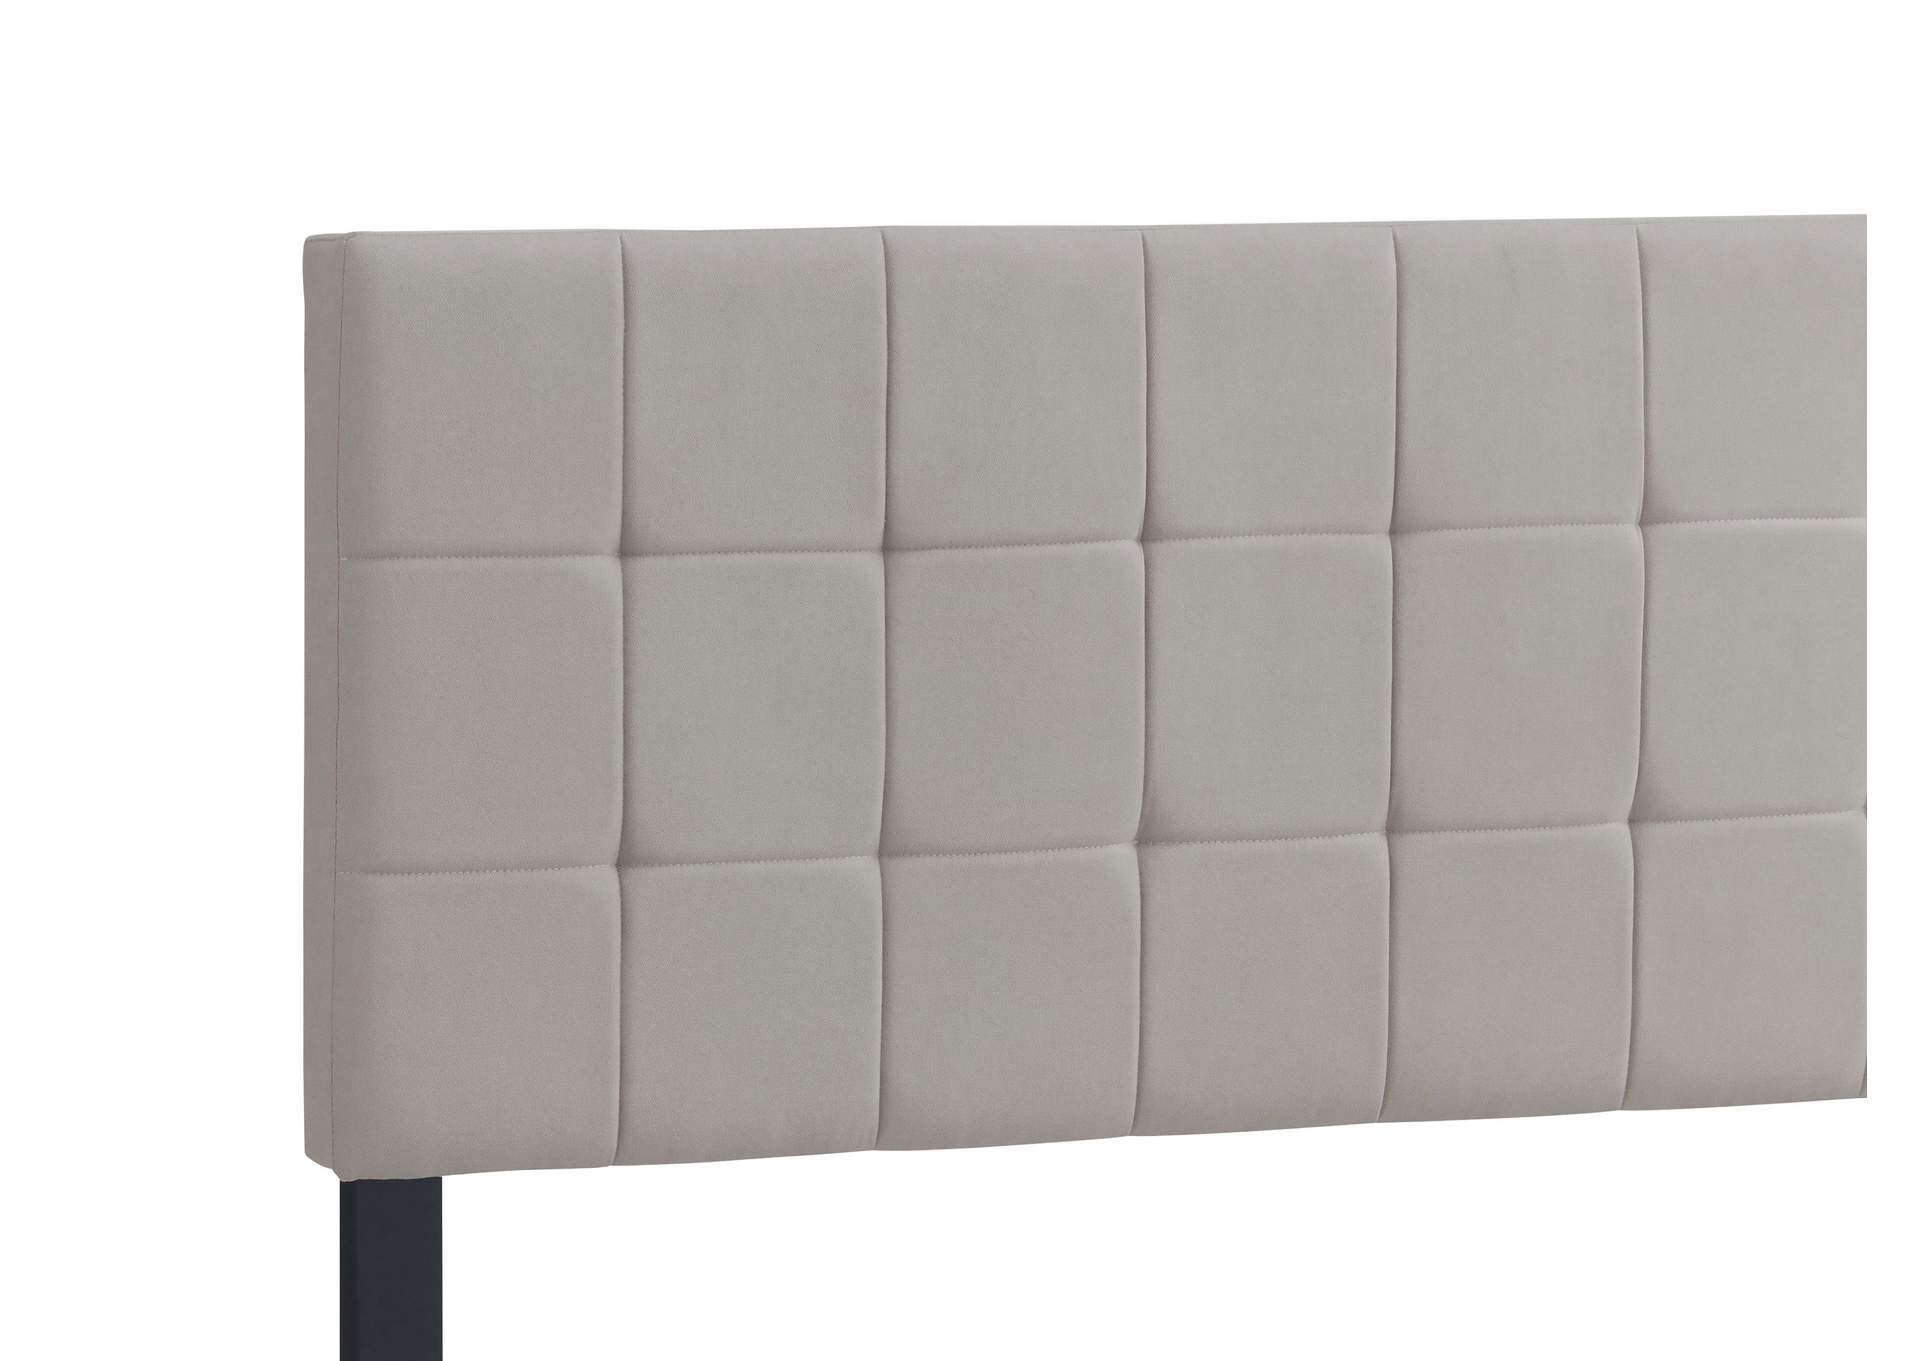 Fairfield Queen Upholstered Panel Bed Beige,Coaster Furniture